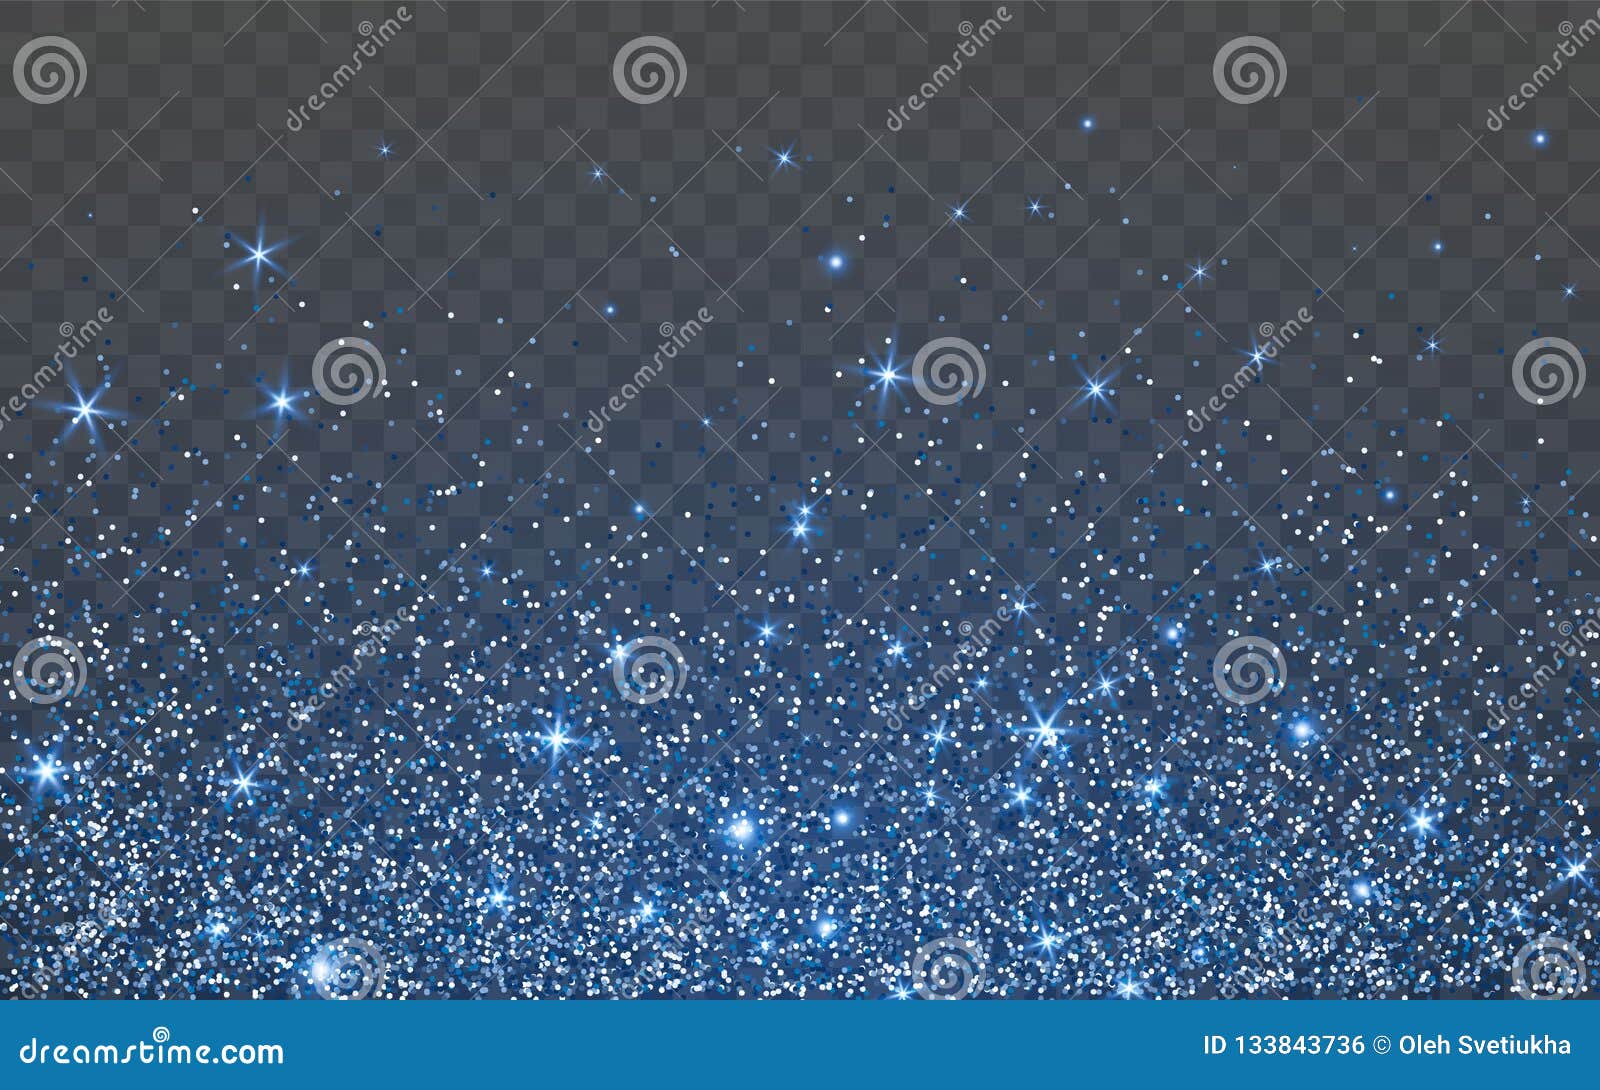 Blue glitter sparkle on a transparent background Vector Image